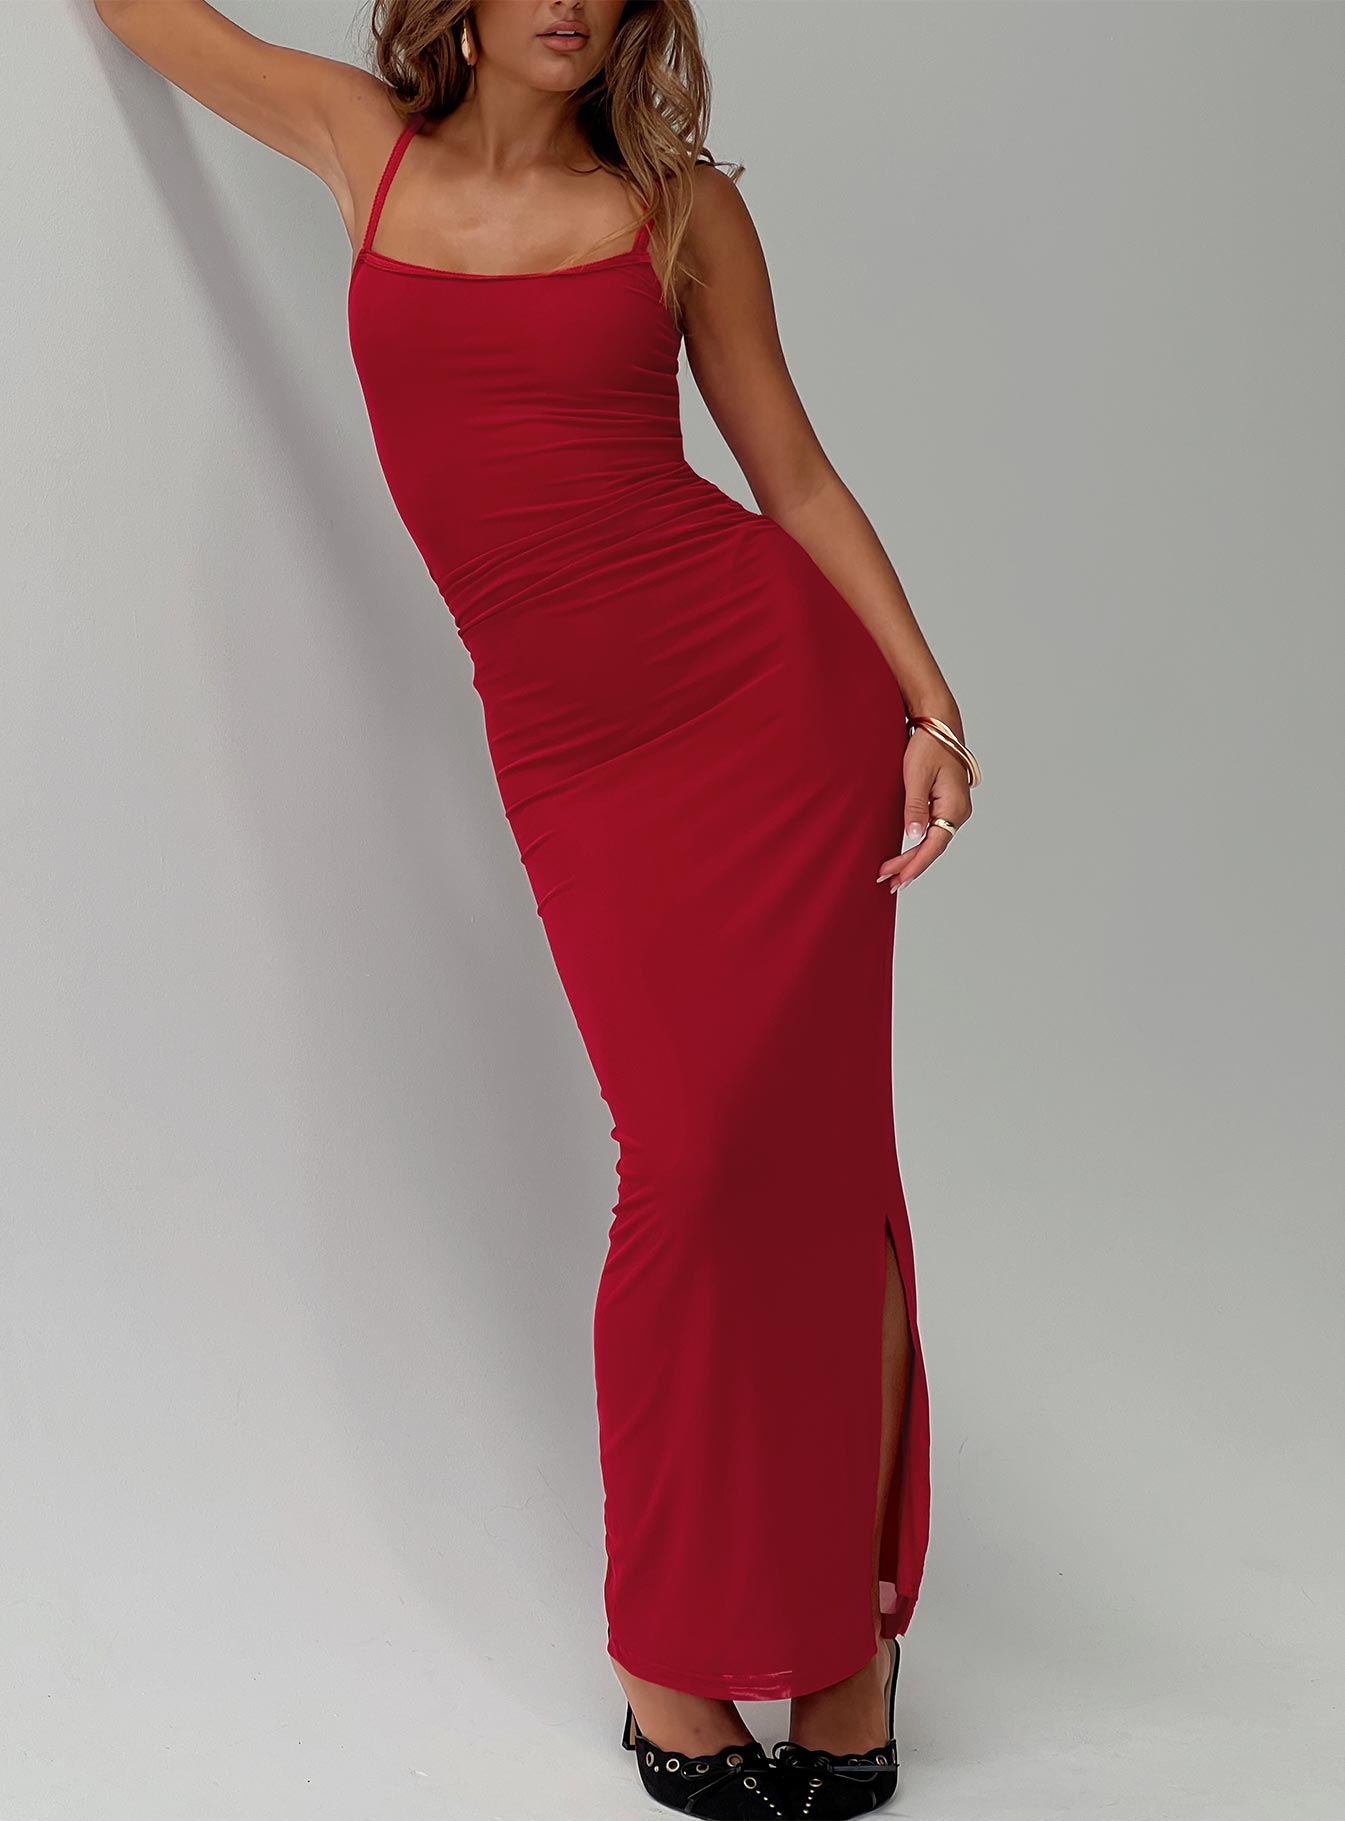 Shop Formal Dress - Apolline Maxi Dress Red fourth image